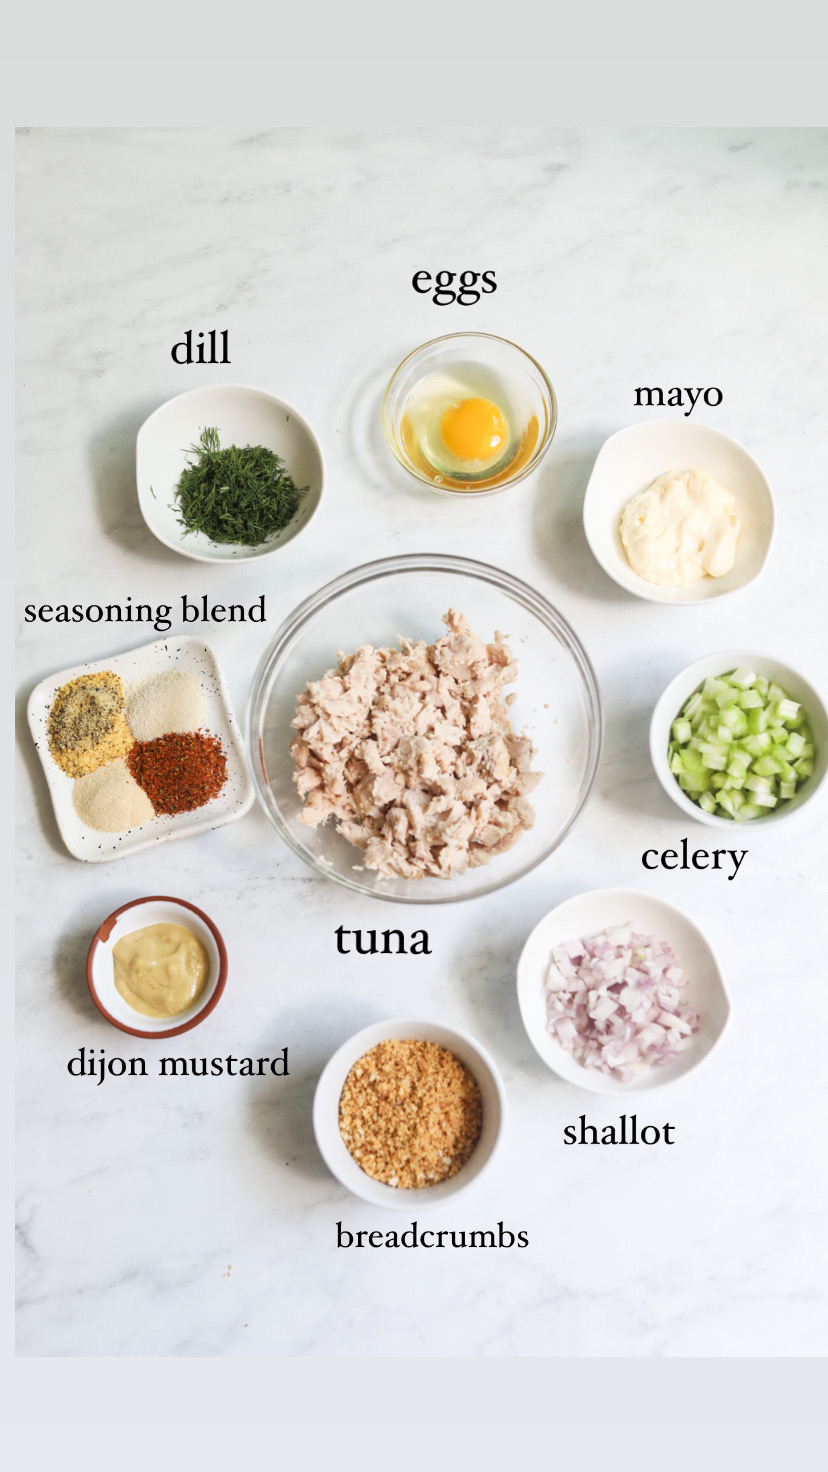 Tuna burger ingredients for patty. In a flat lay, small bowls of mayo, egg, dill, seasoning blend, dijon mustard, breadcrumbs, shallot, celery, tuna and mayo. 